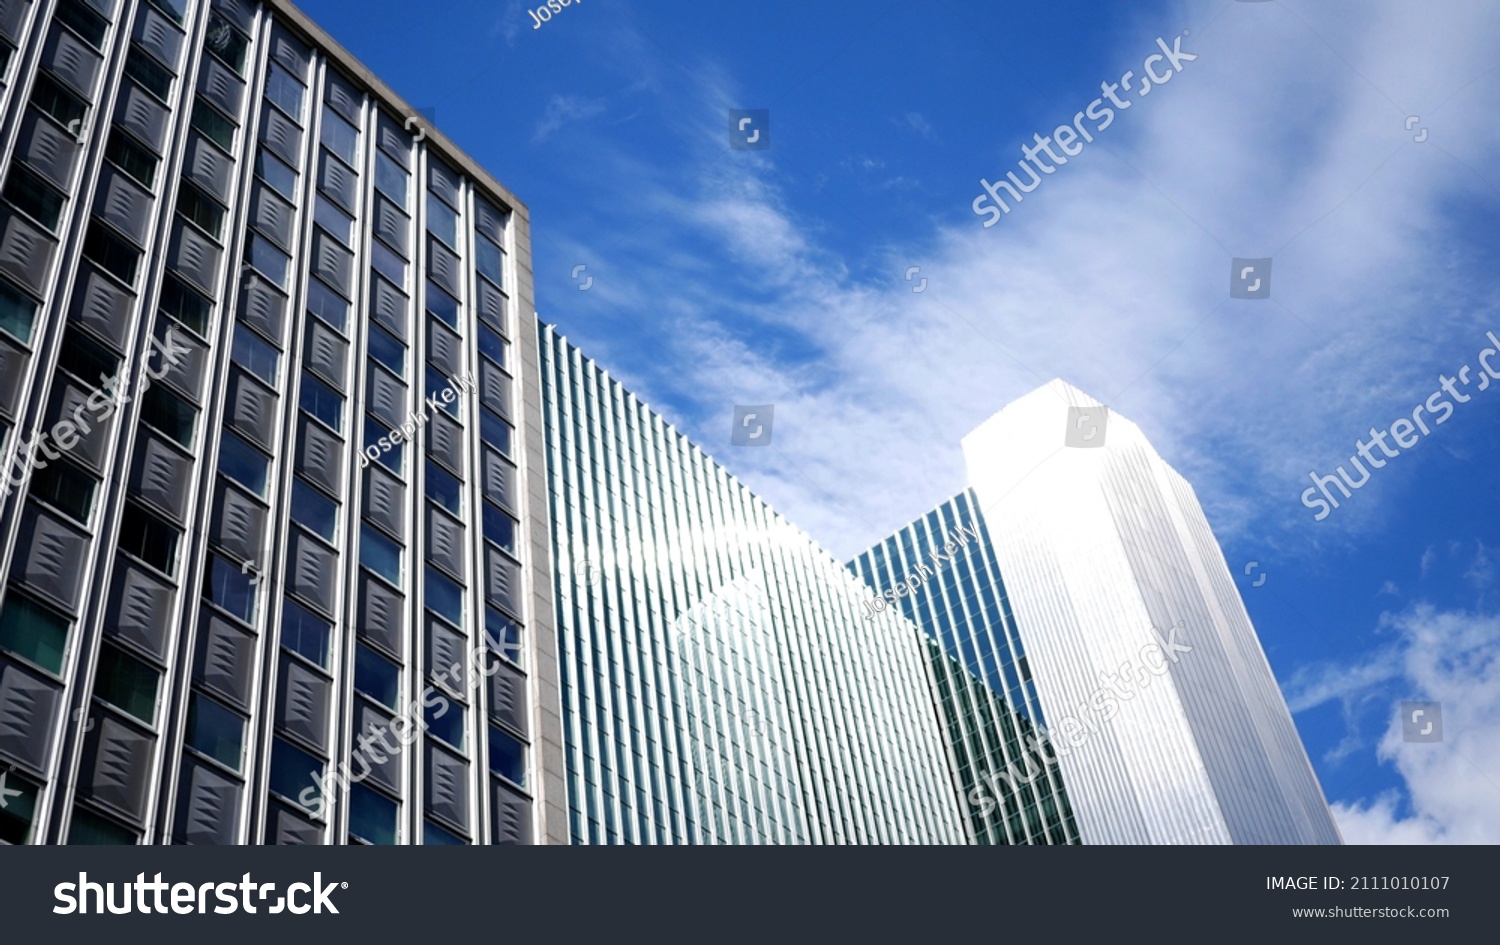 Daytime Establishing Photo of Corporate Buildings against Blue Sky #2111010107